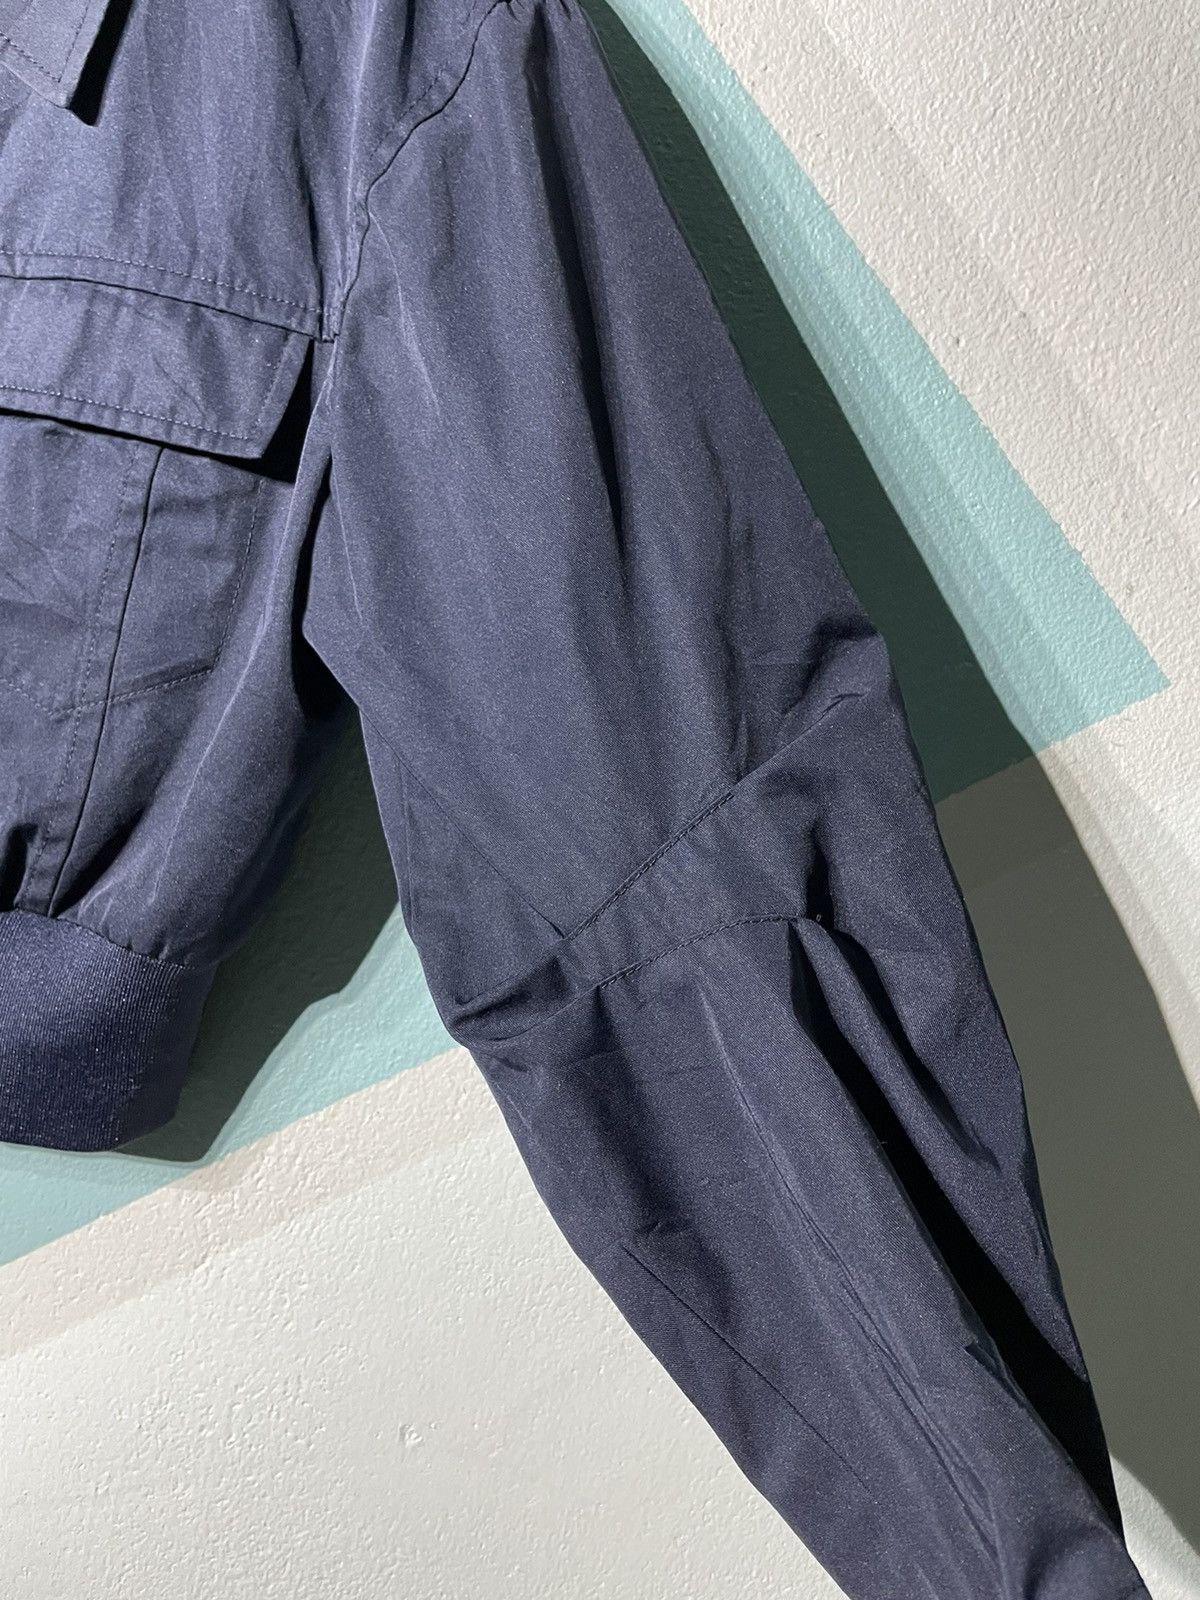 DELETE IN 24h‼️ Adidas Y-3 cropped jacket - 3